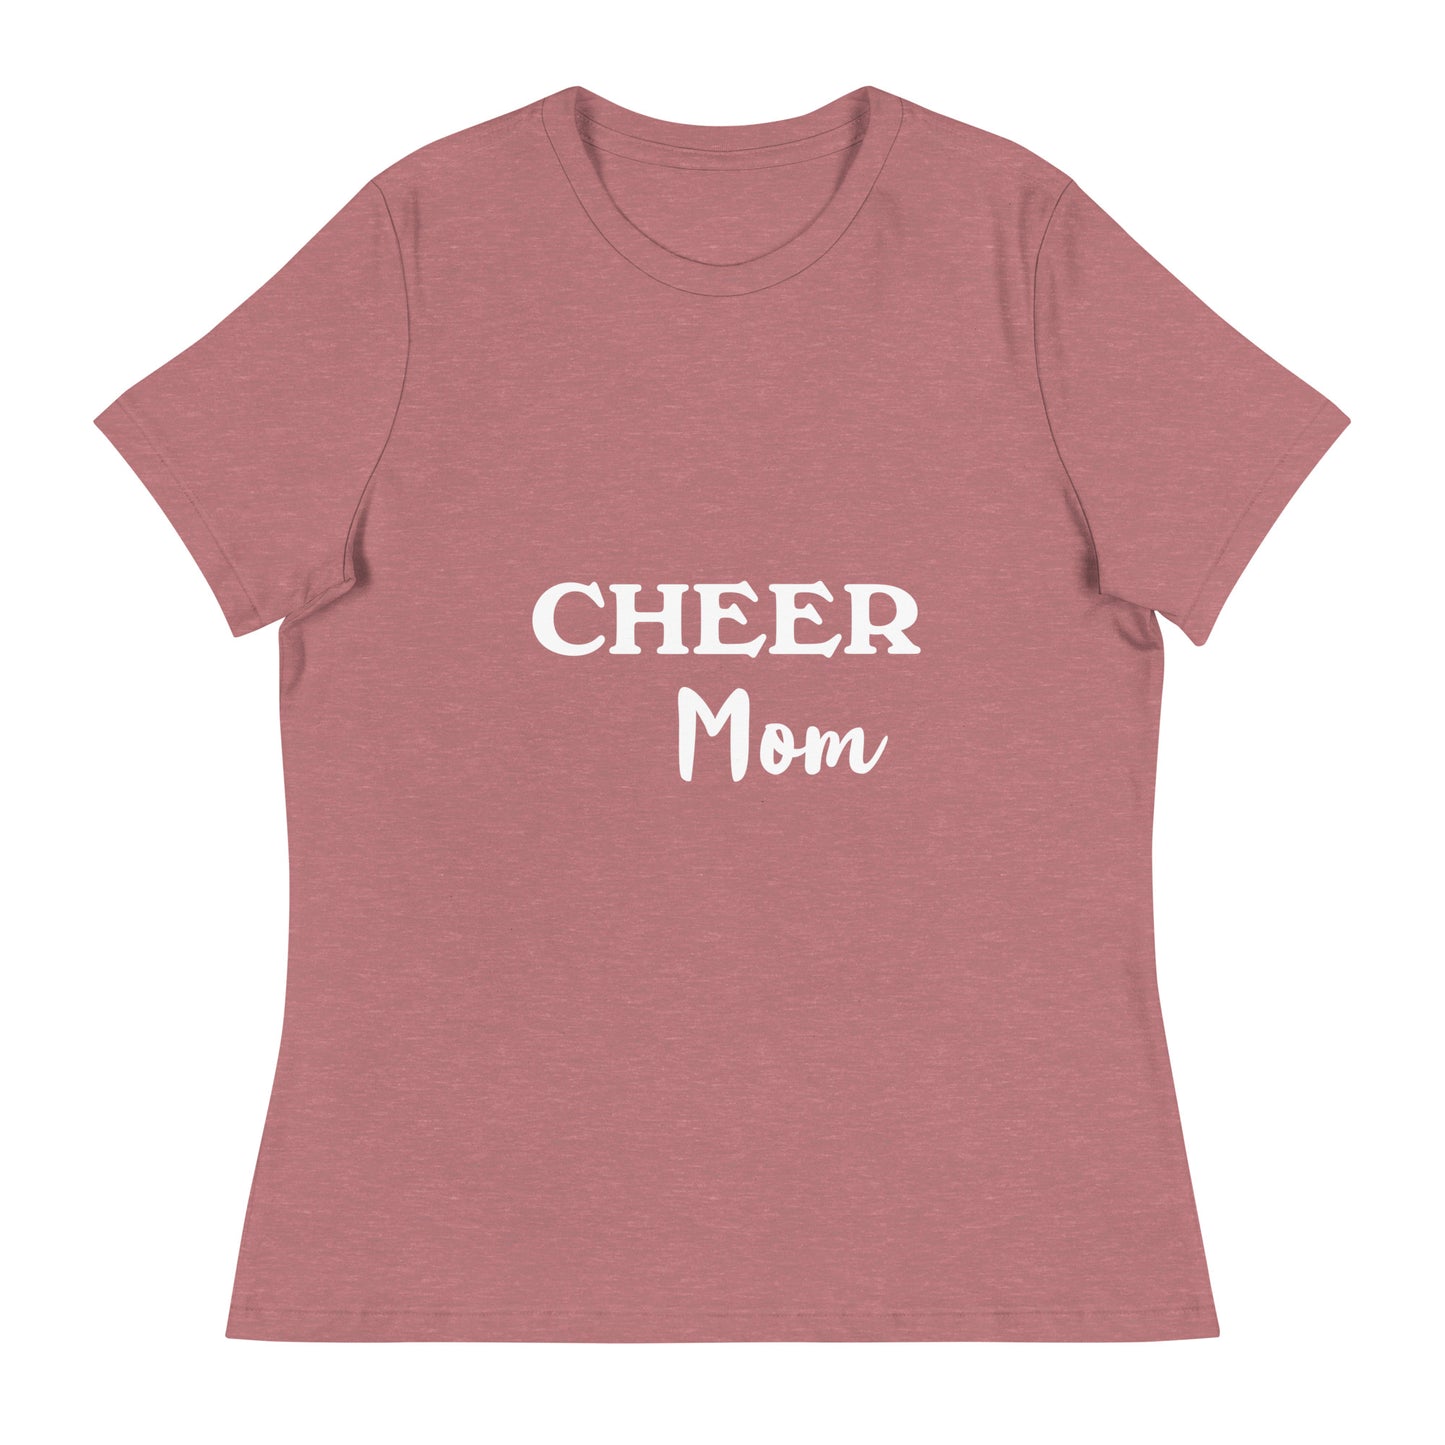 Cheer Mom Printed T-Shirt